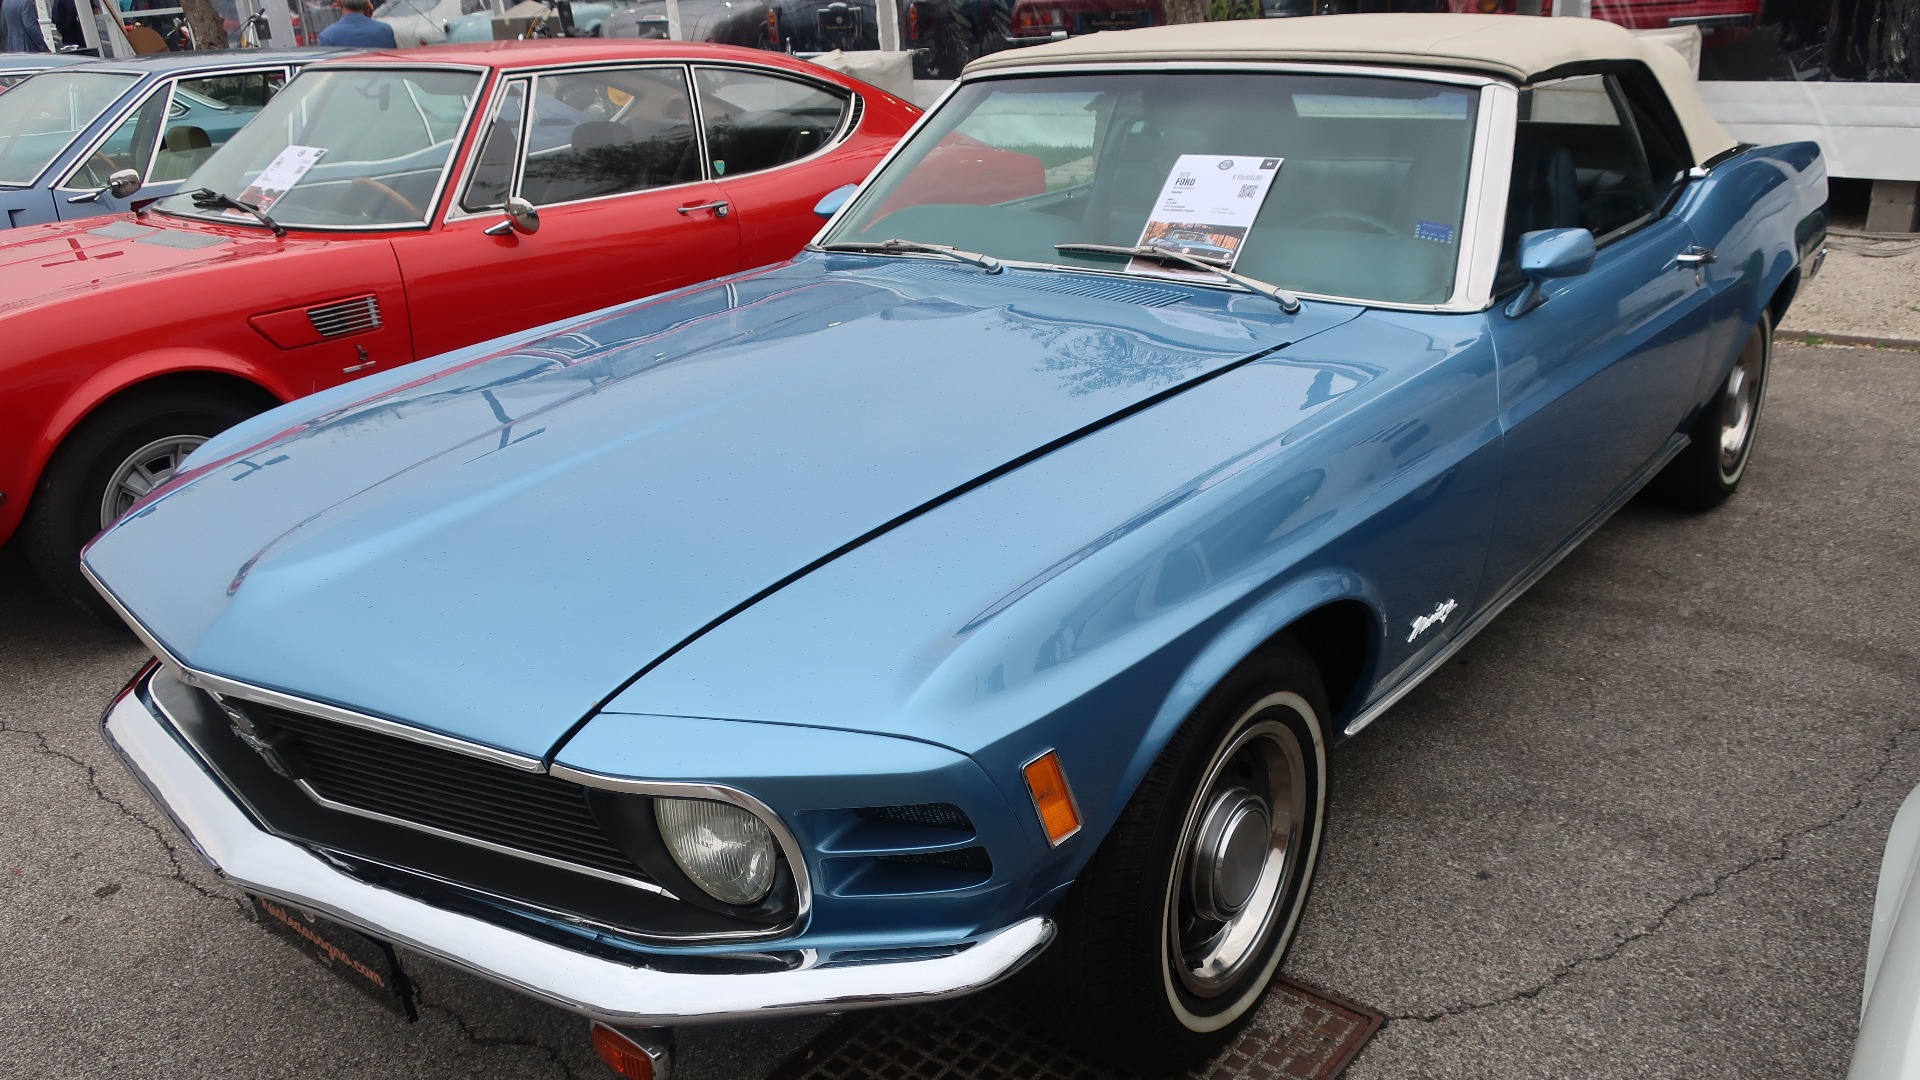 1970 Ford Mustang Convertible til 69.000 Euro, vitner om et prisbilde som ligger over det norske.